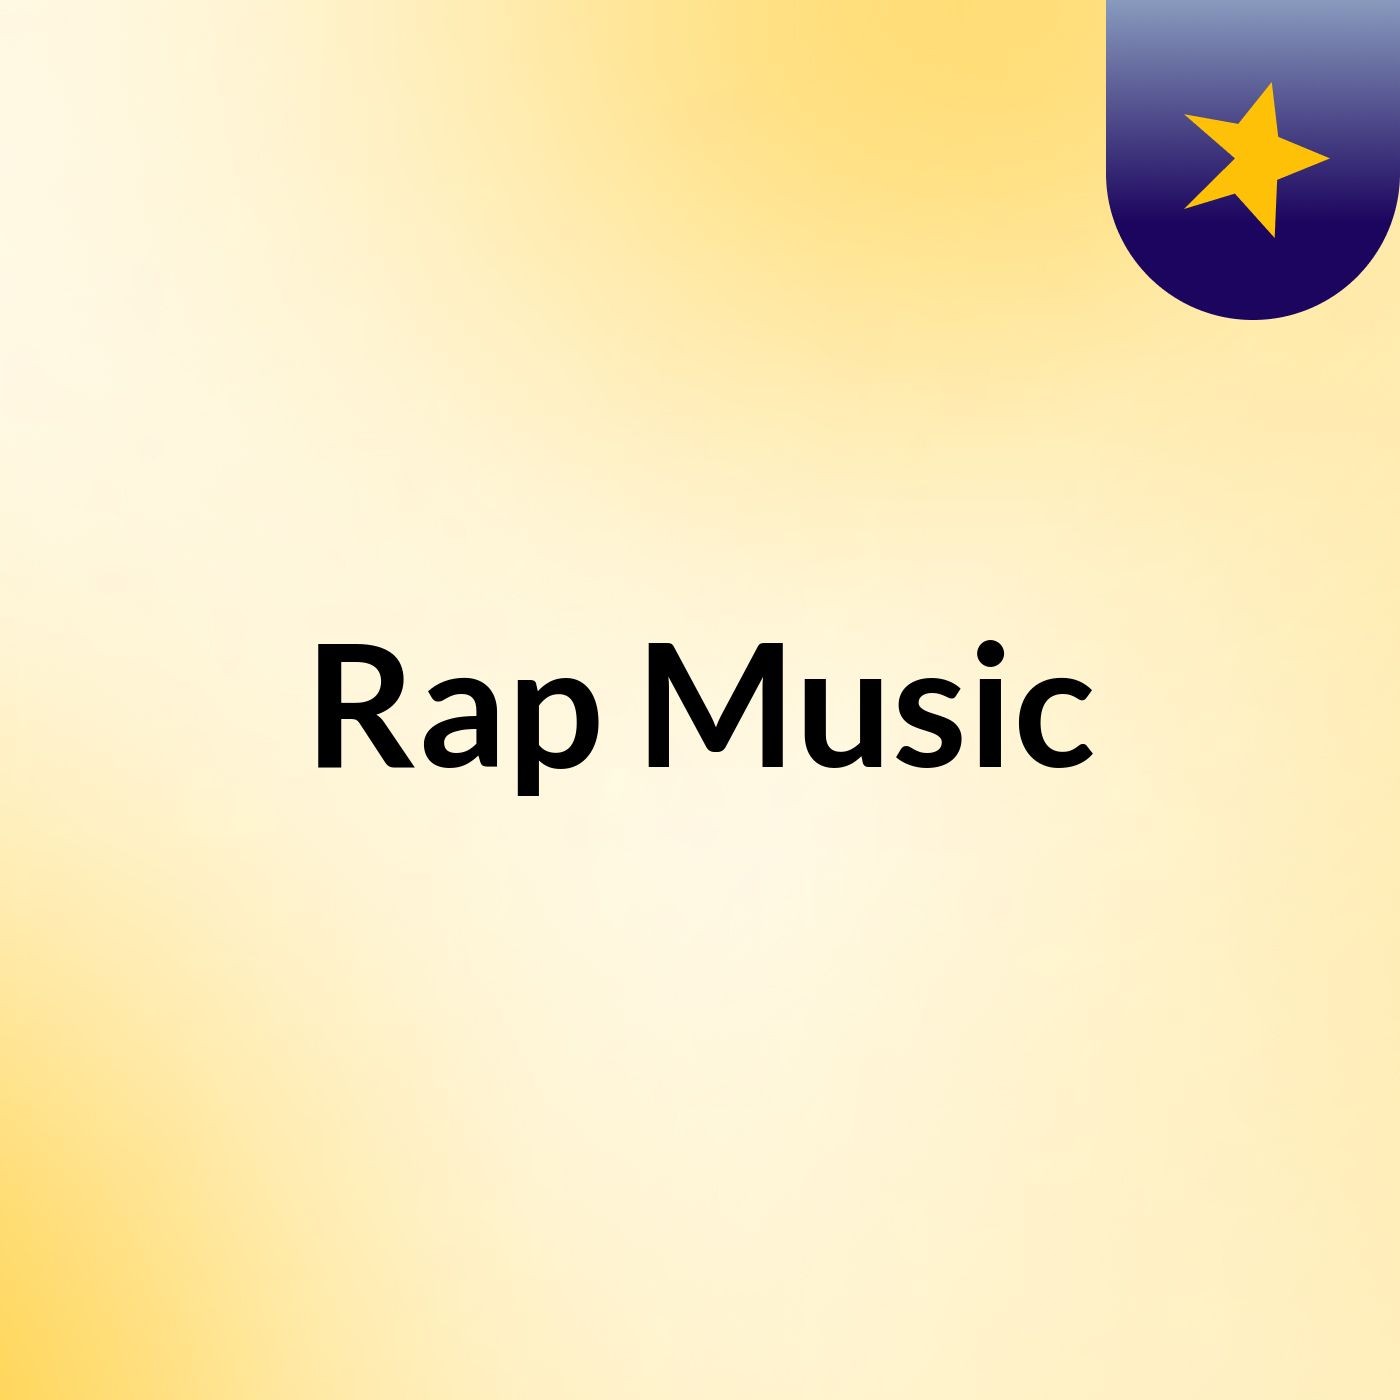 Episode 2 - Rap Music